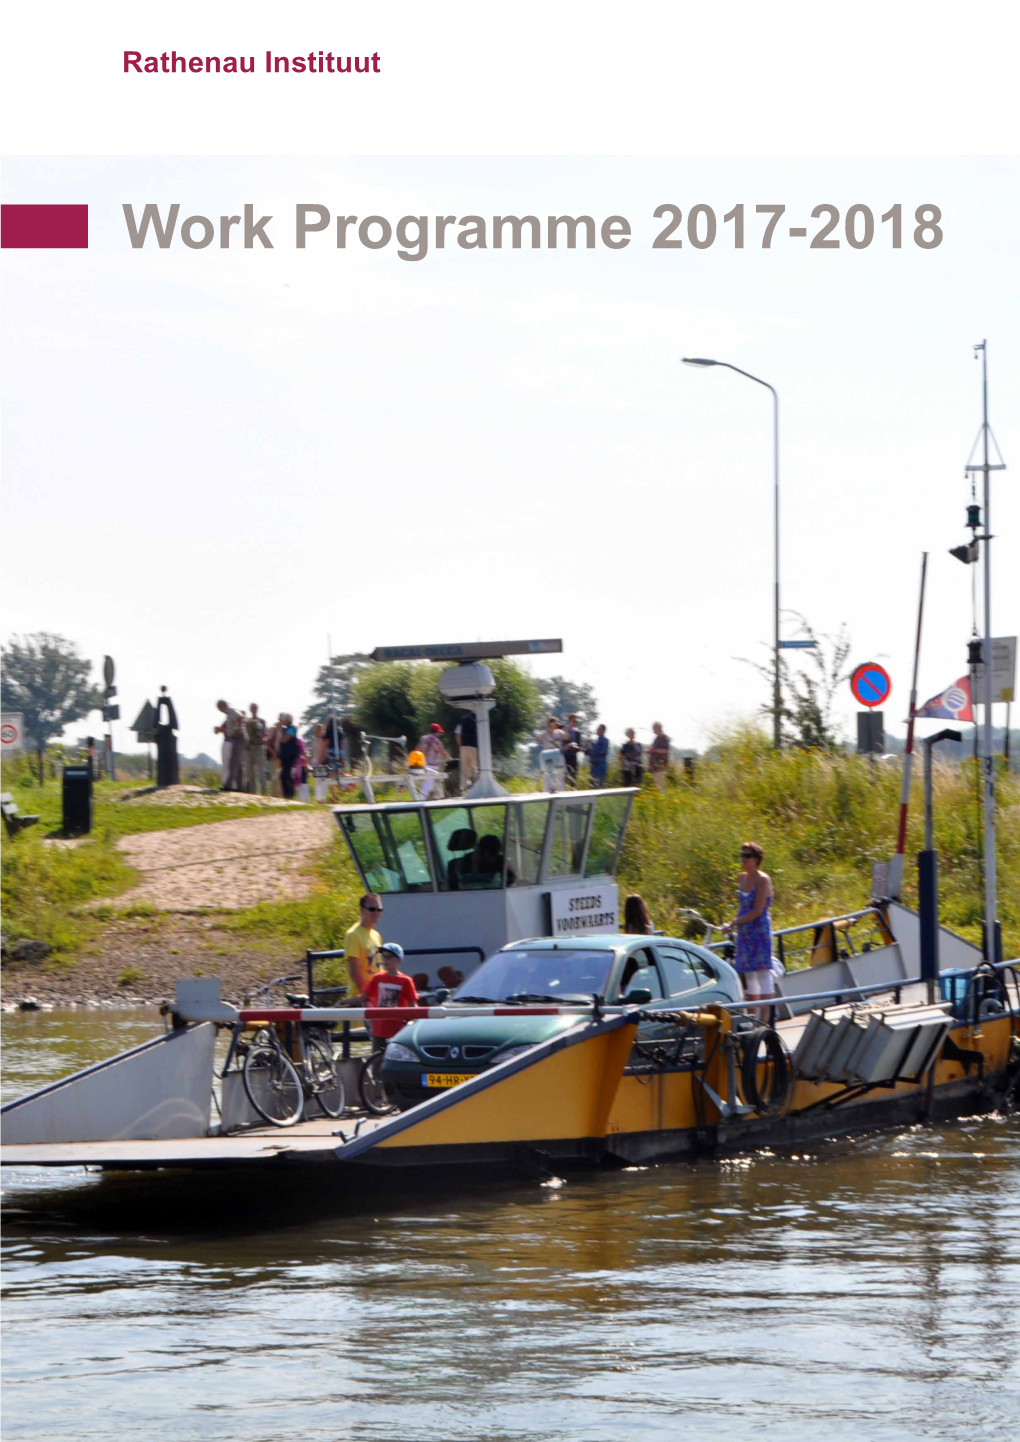 Work Programme 2017-2018